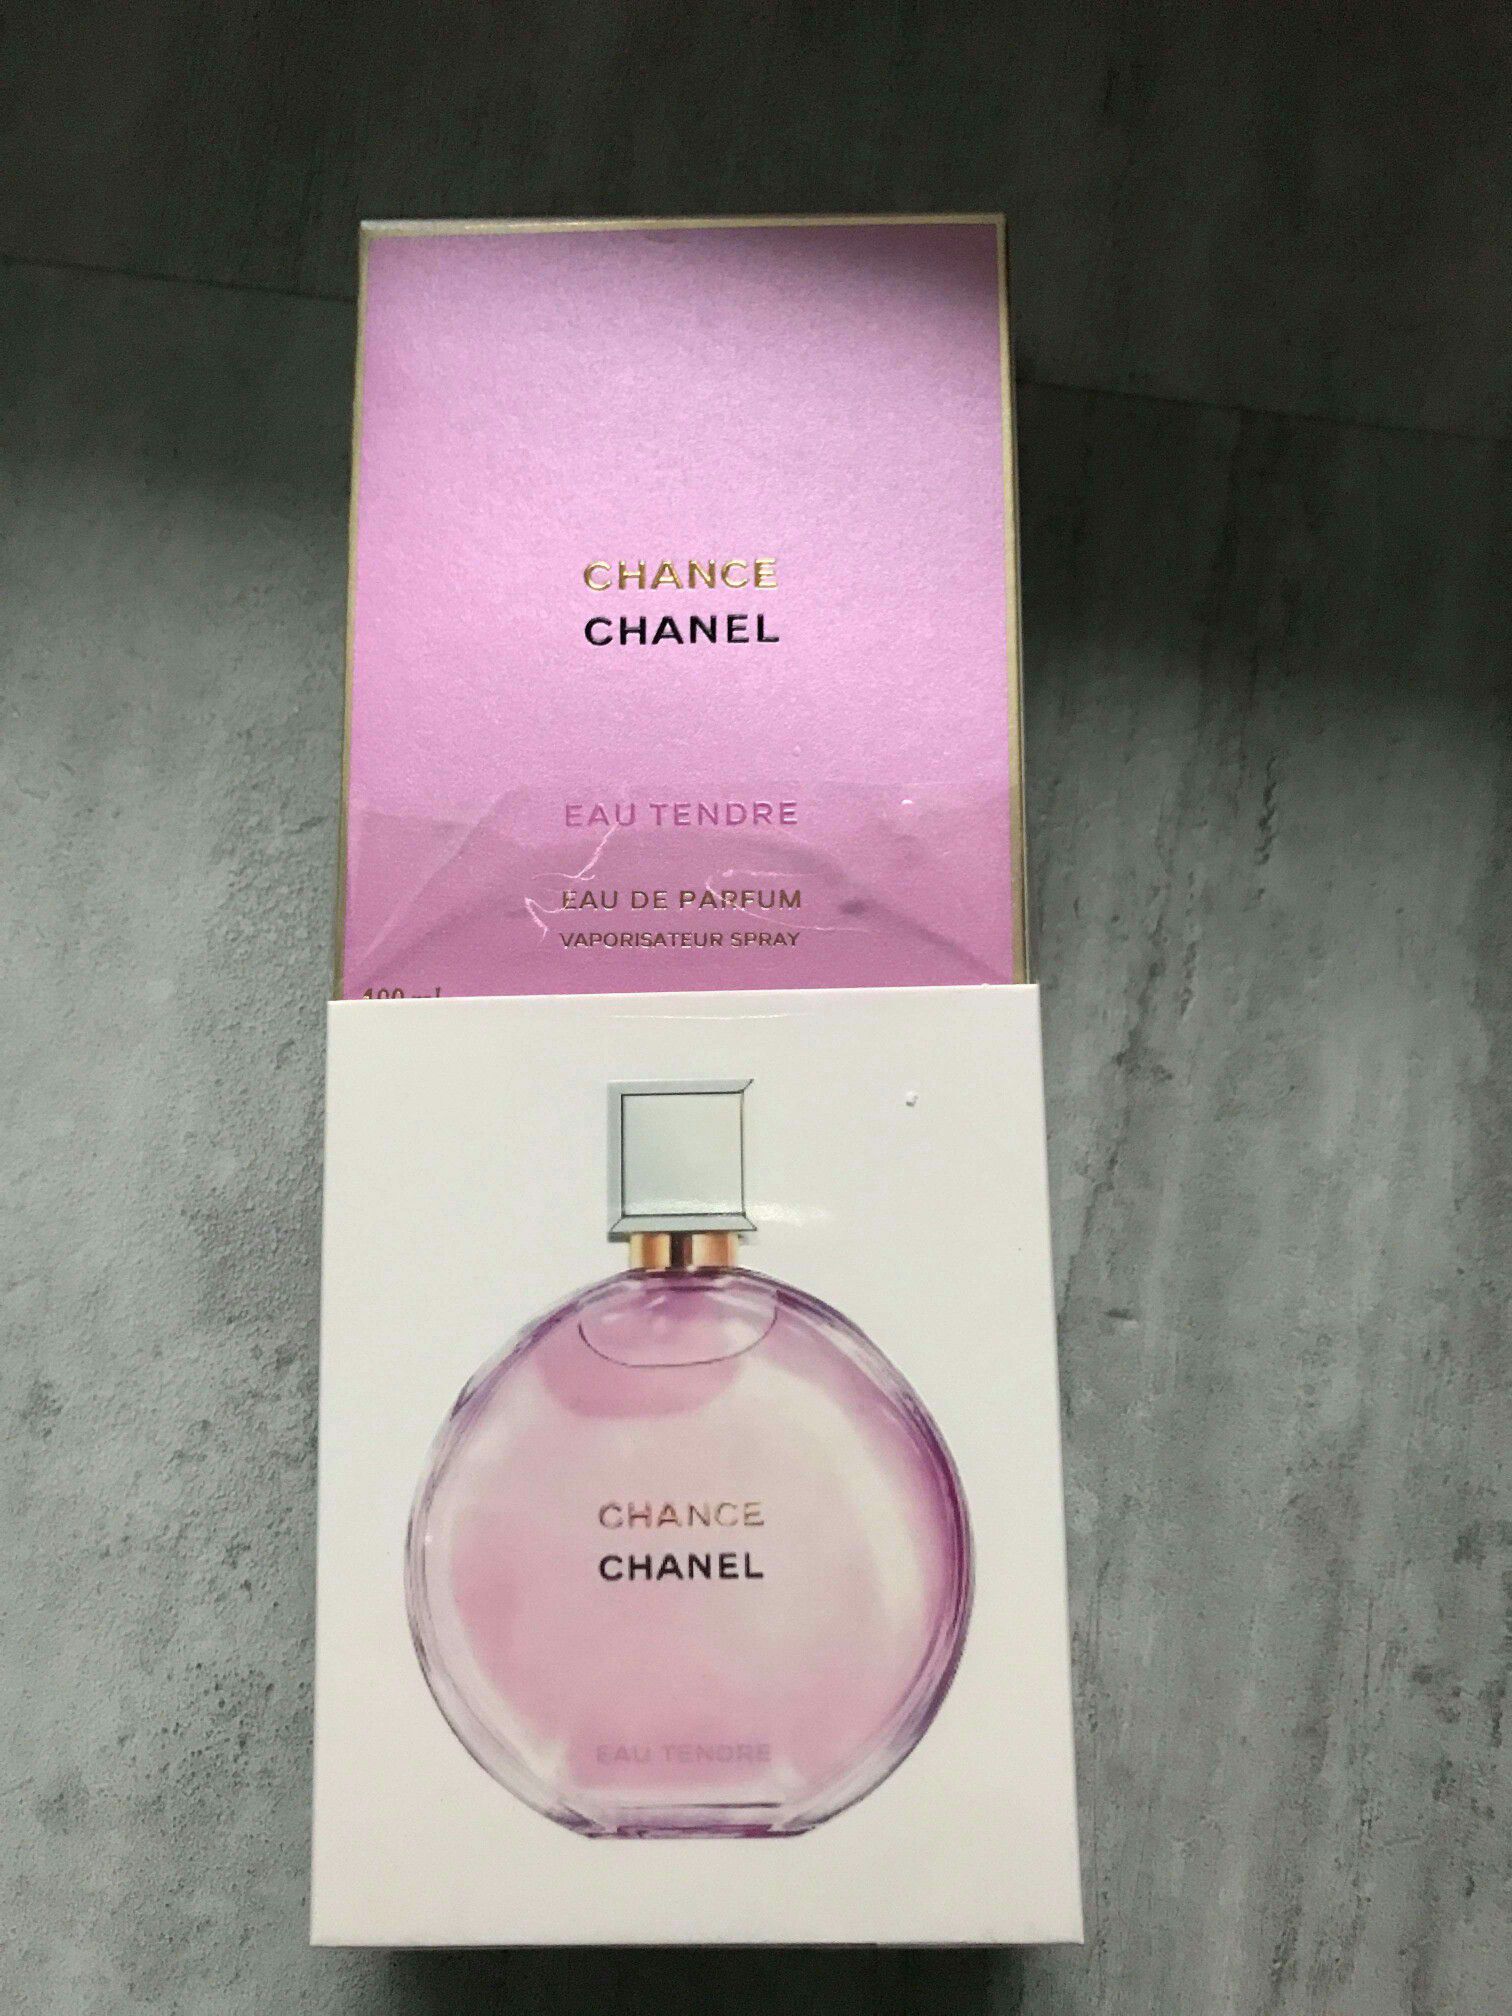 Chance chanel perfume